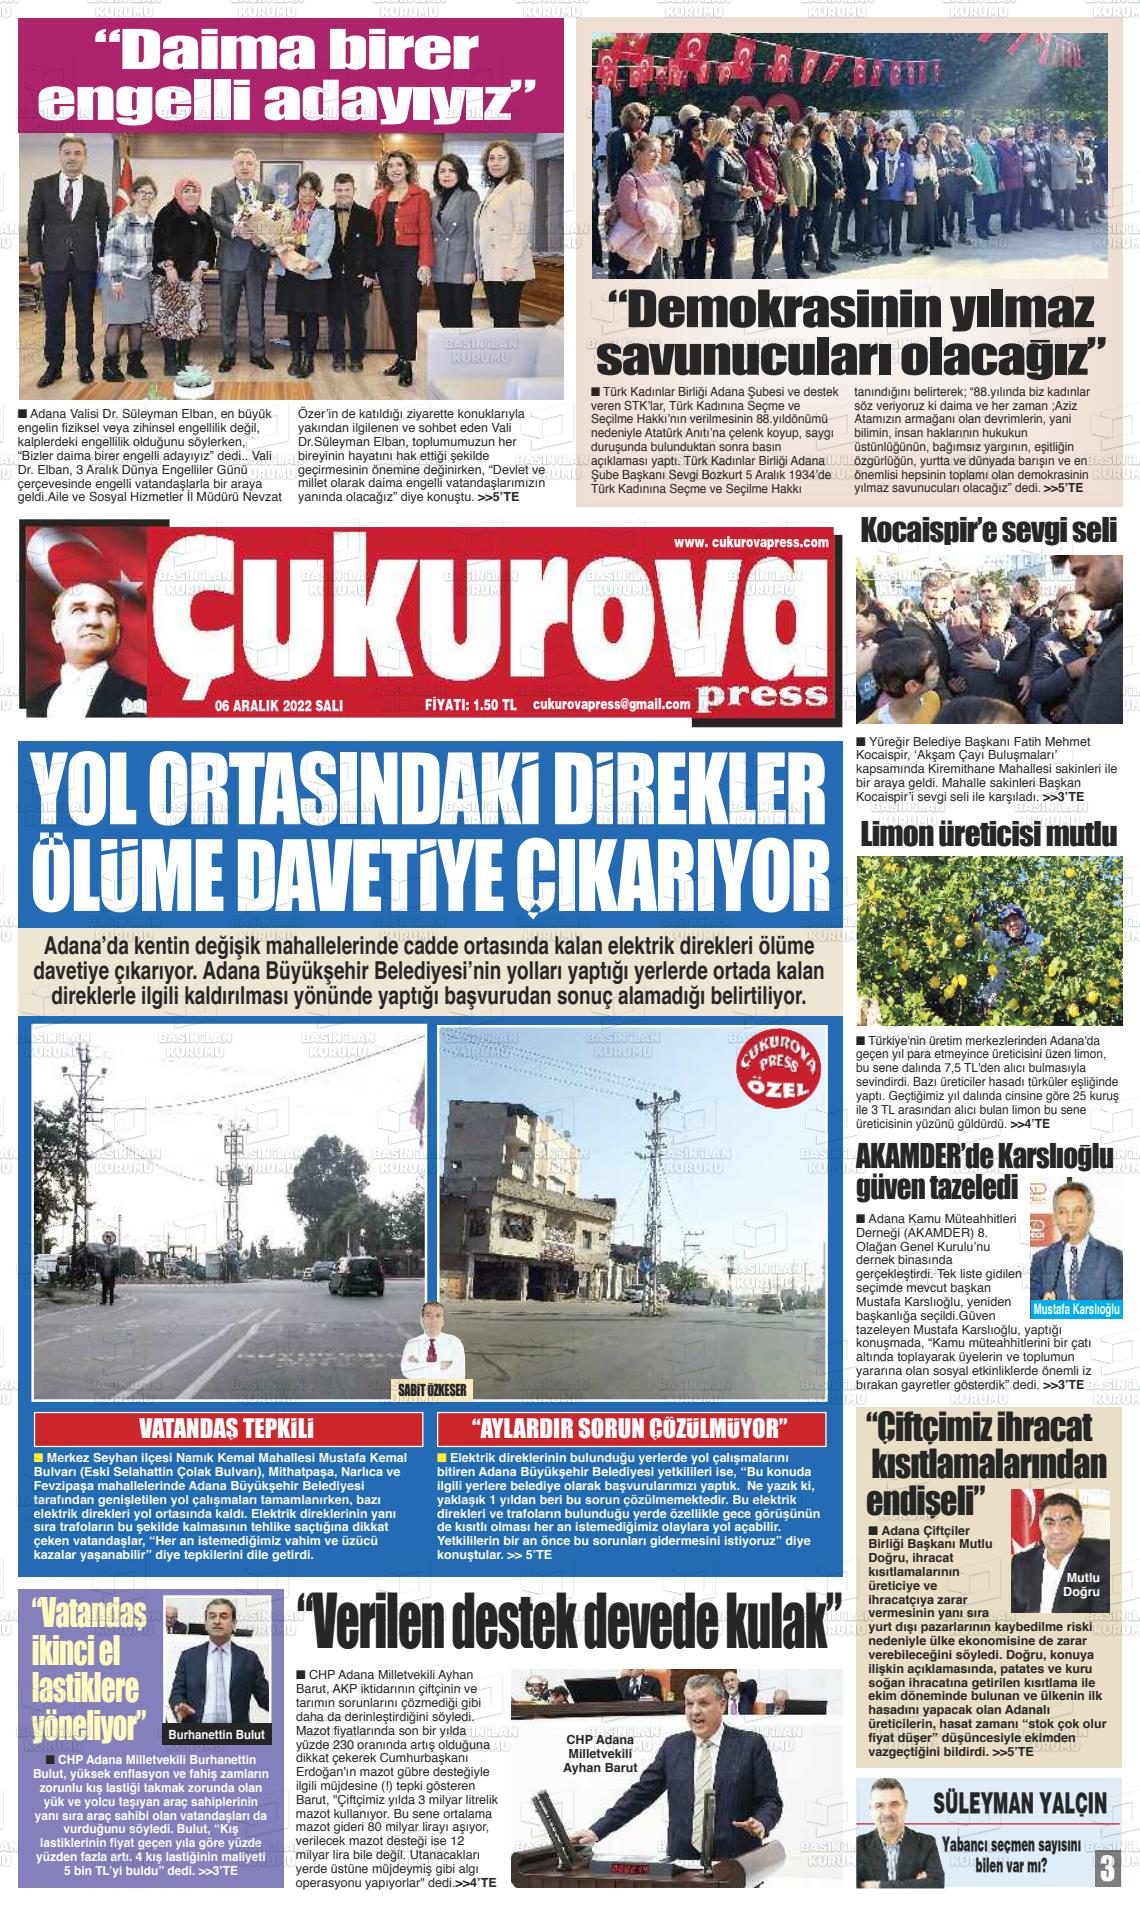 06 Aralık 2022 Çukurova Press Gazete Manşeti